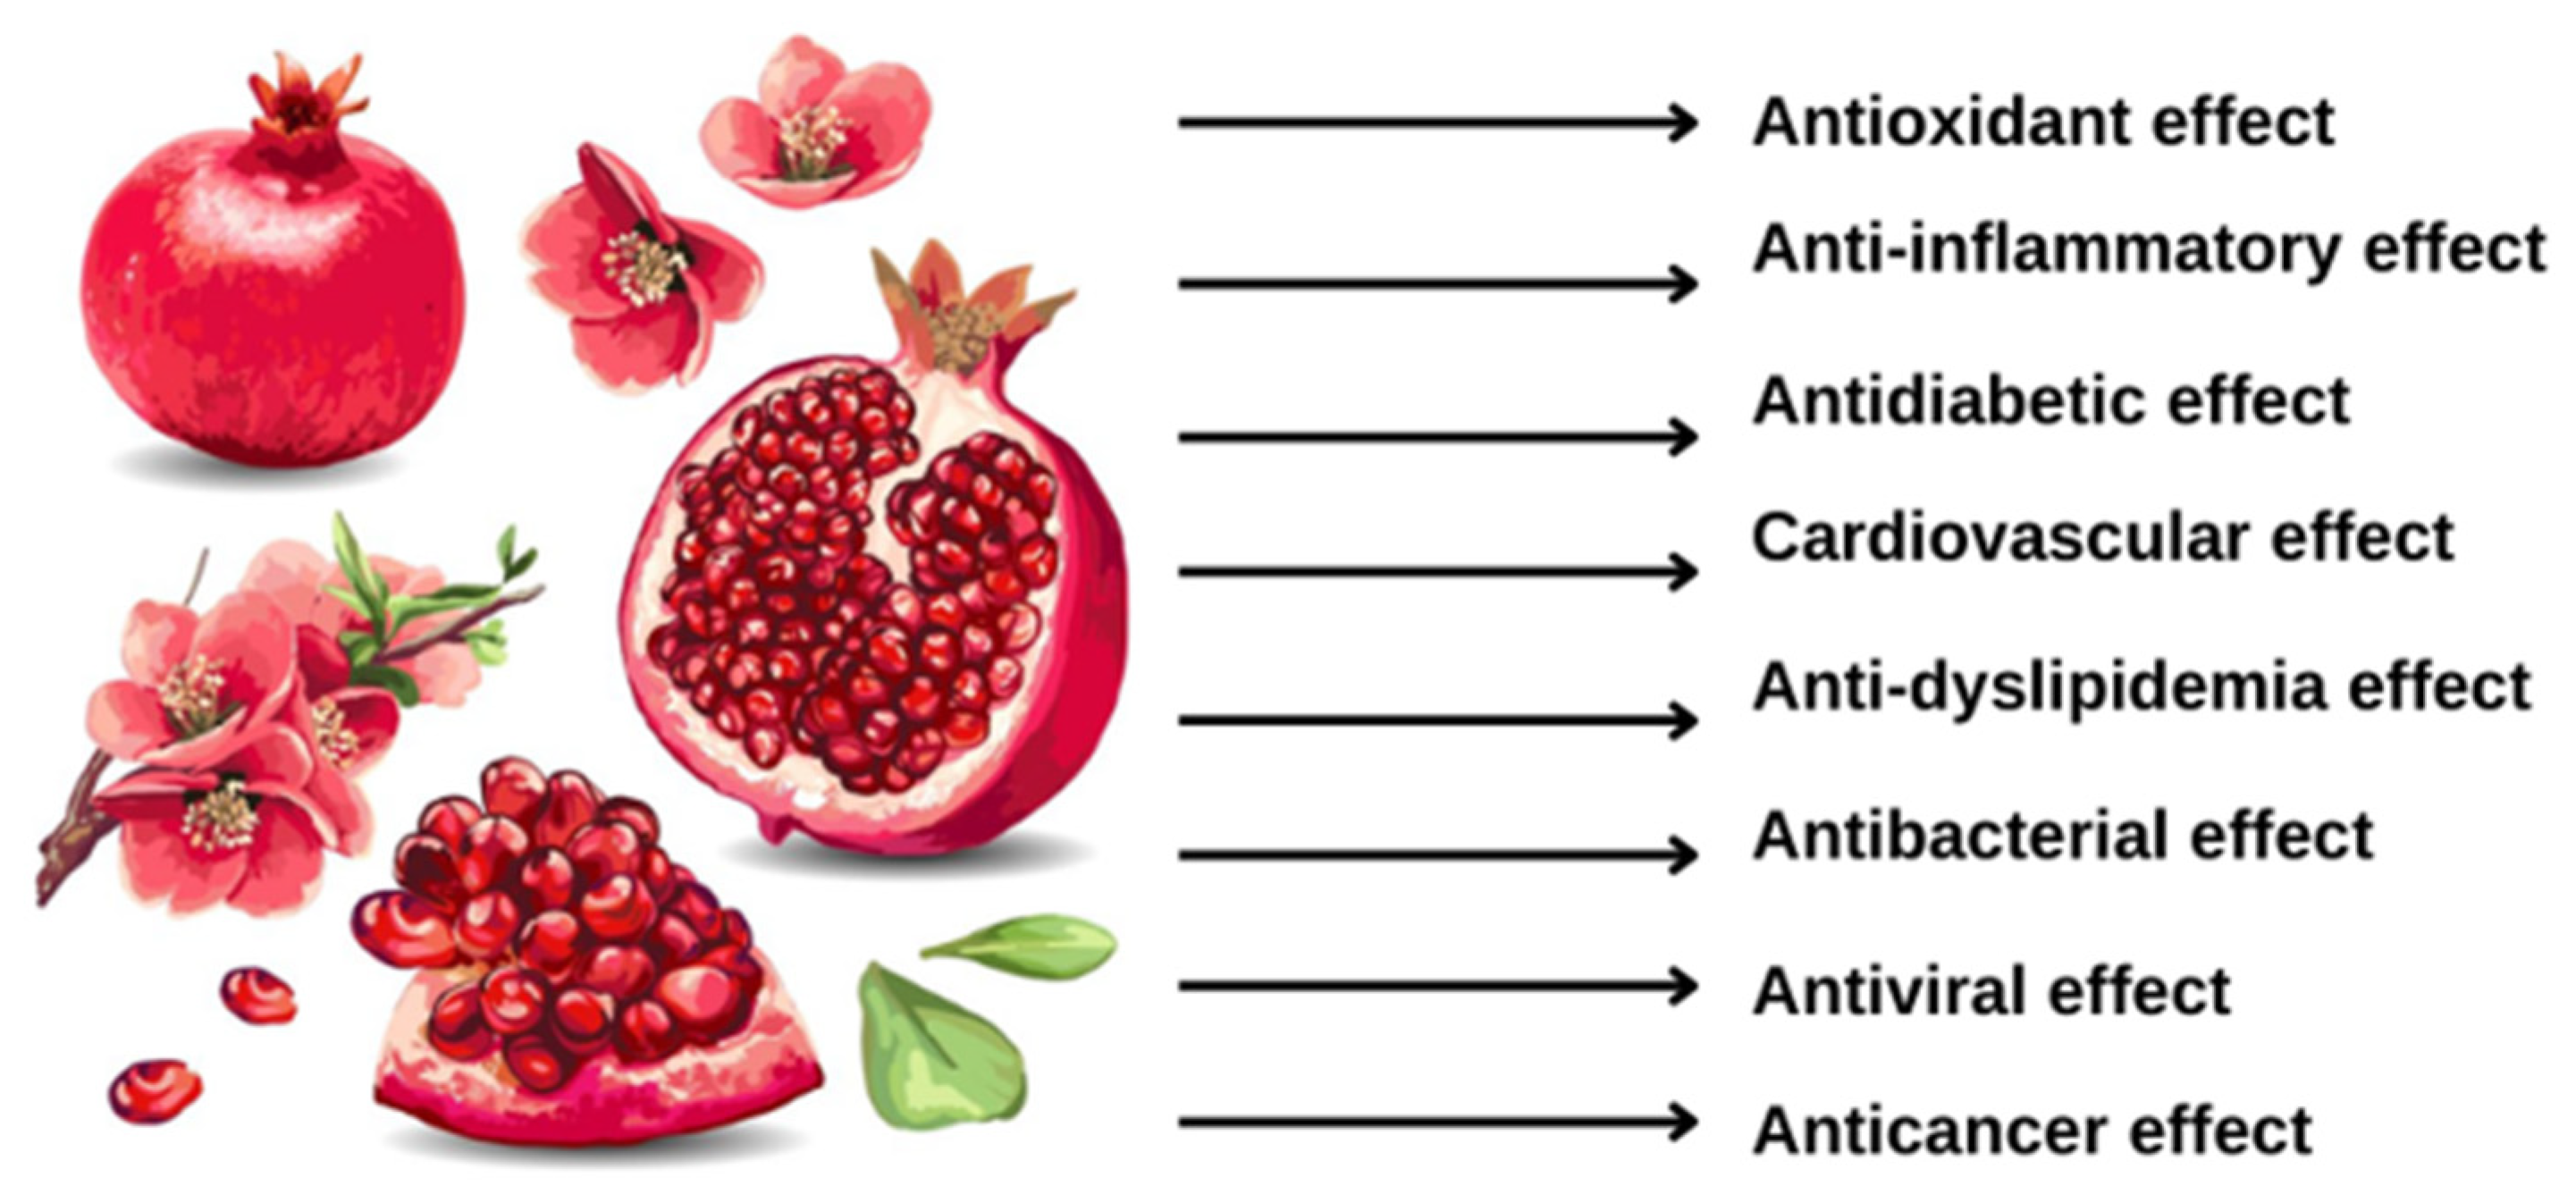 Pomegranate health studies